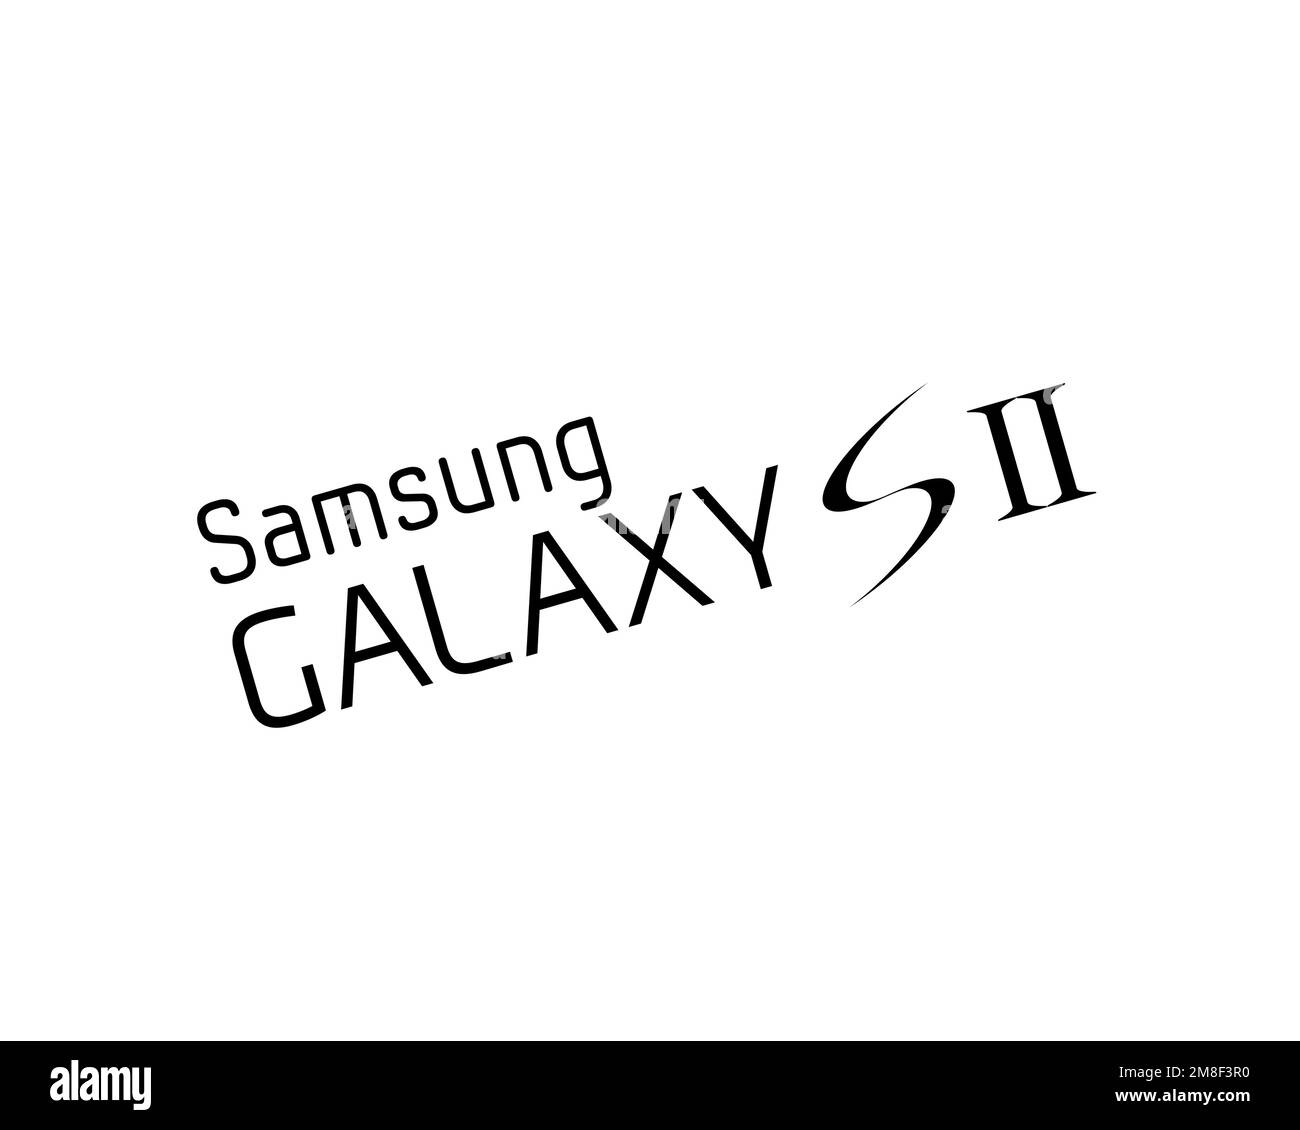 Samsung Galaxy S II, rotated logo, white background Stock Photo